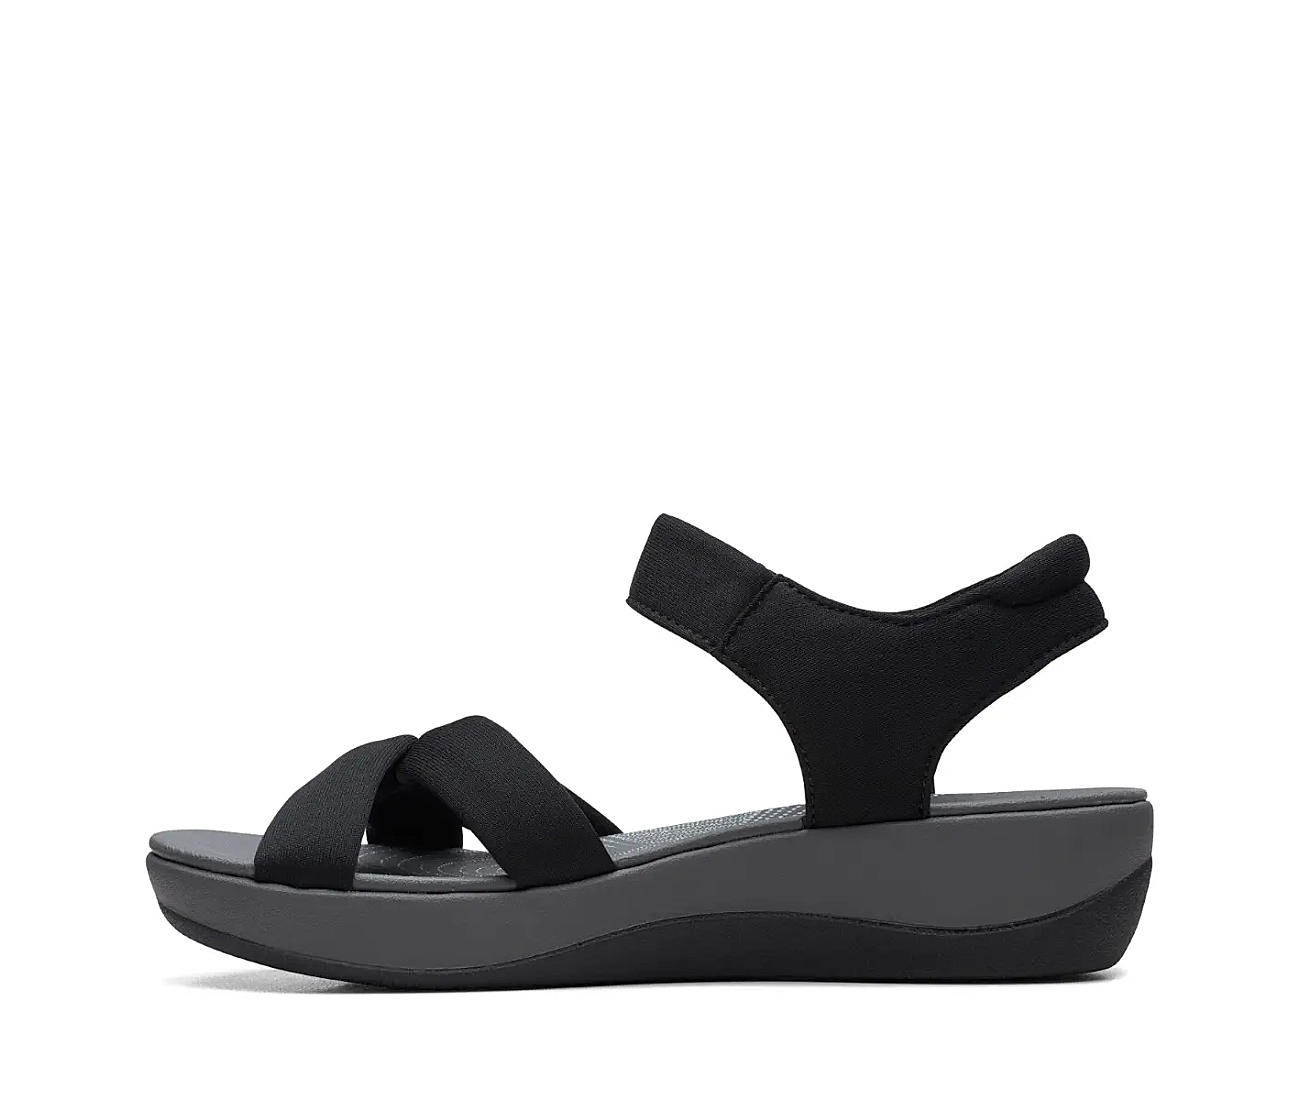 Sandal SALE | Sandals On Sale - Brantano Official Site